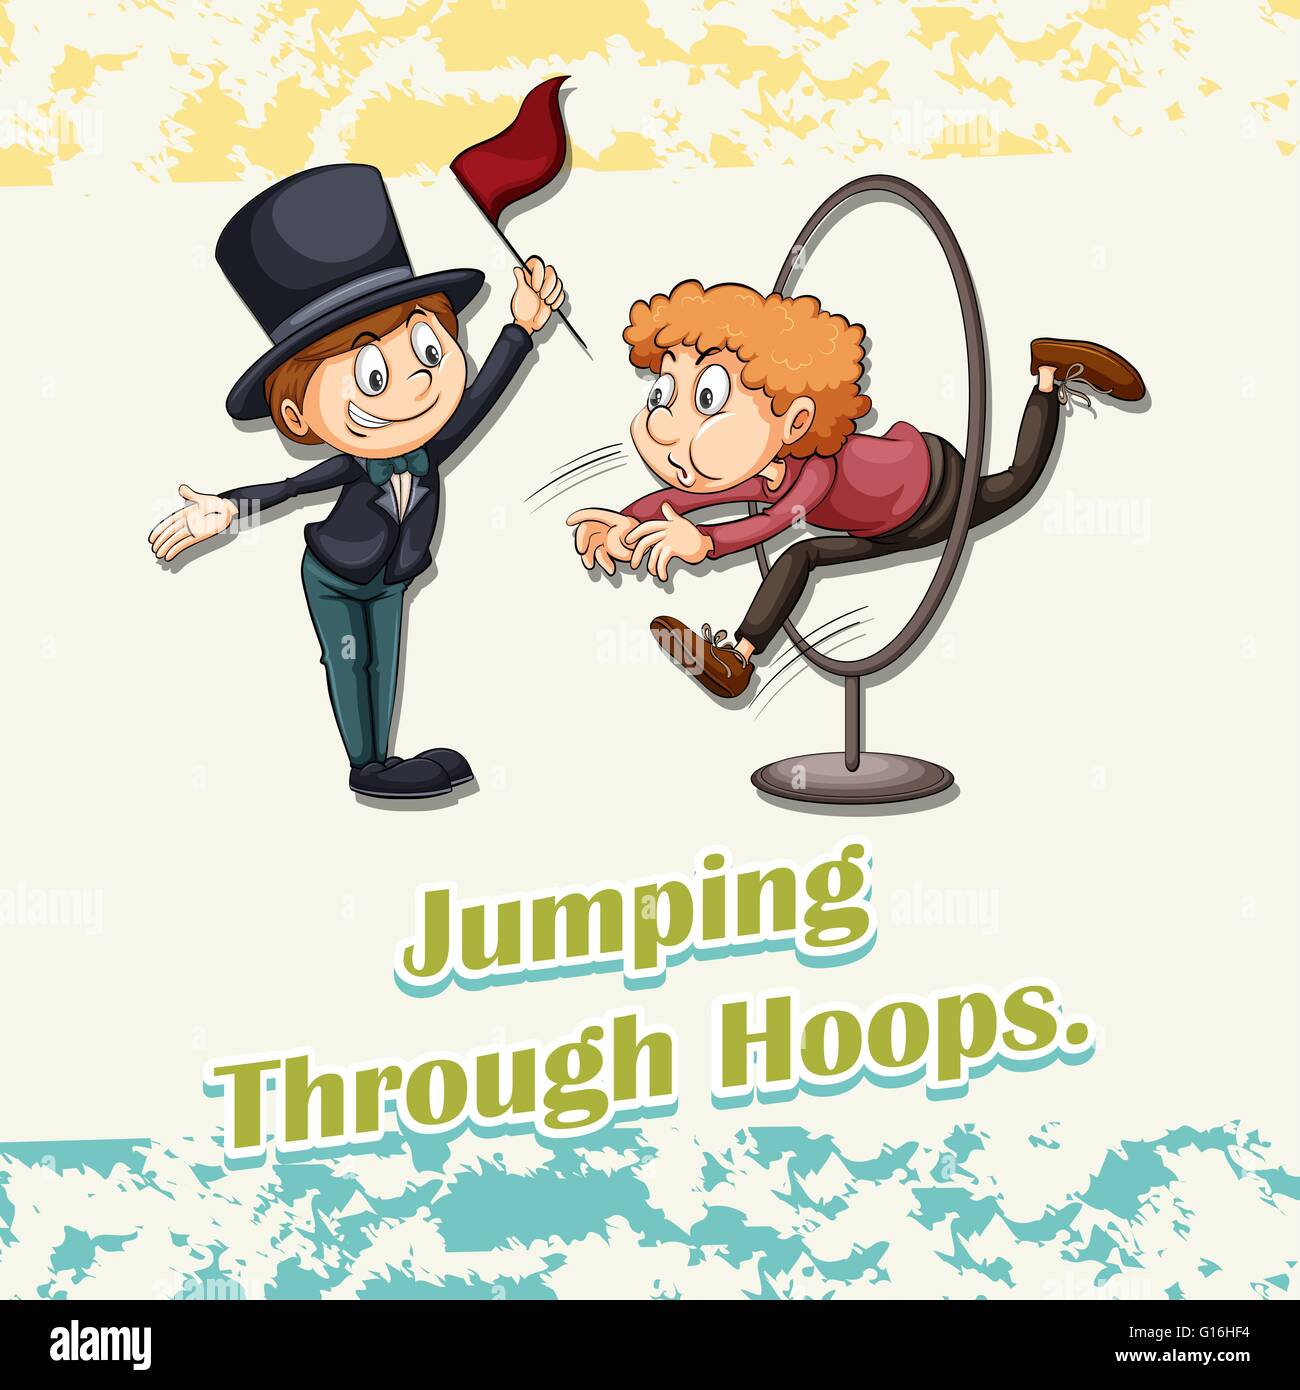 Idiom saying jumping through hoops Stock Vector